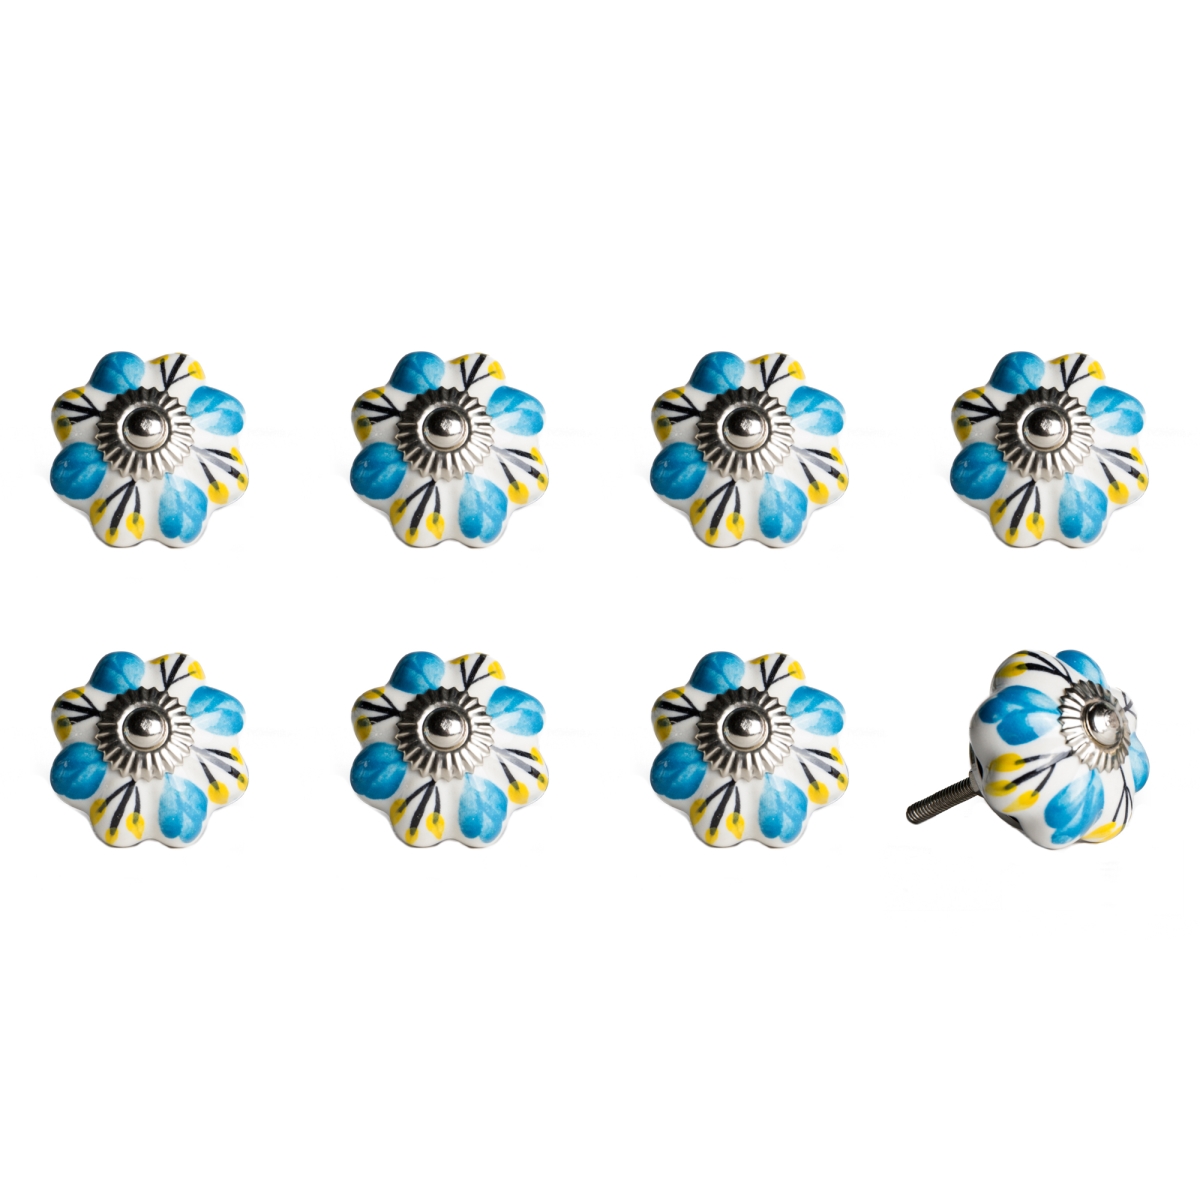 676685044877 Vintage Handpainted Ceramic Flower Knob Set - White & Blue - Pack Of 8